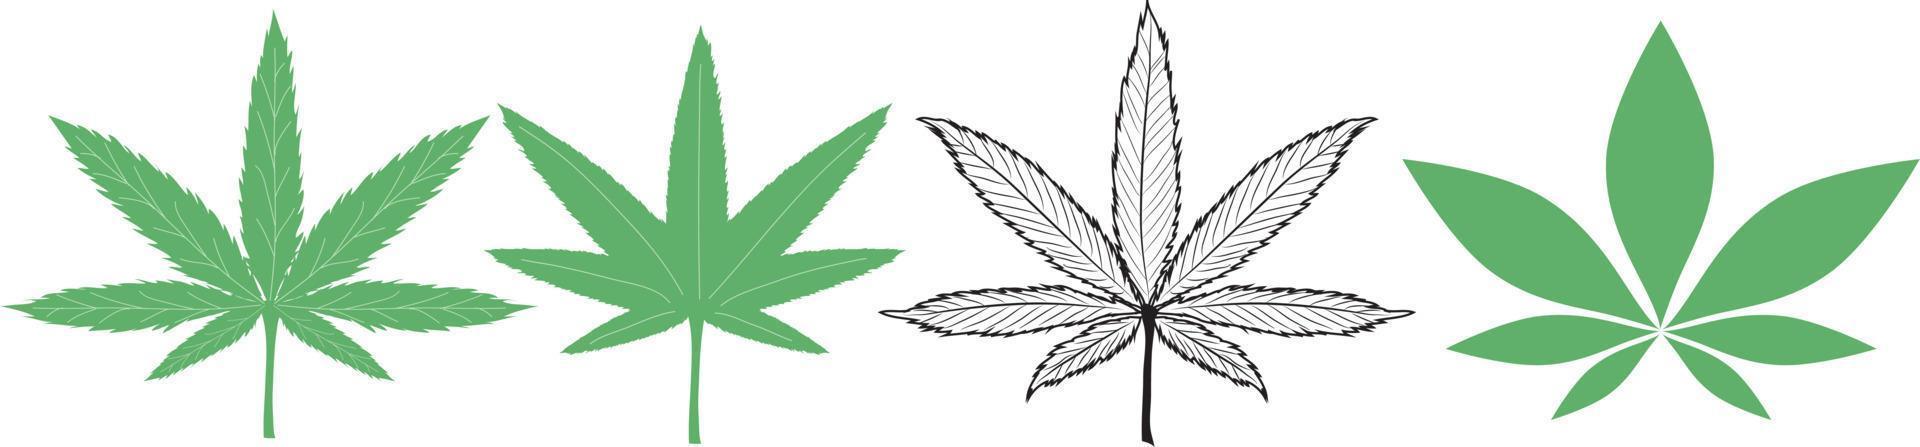 hojas de cannabis verde aisladas en fondo blanco, icono de marihuana o cáñamo, signo médico de cannabis, ilustración 2d vector